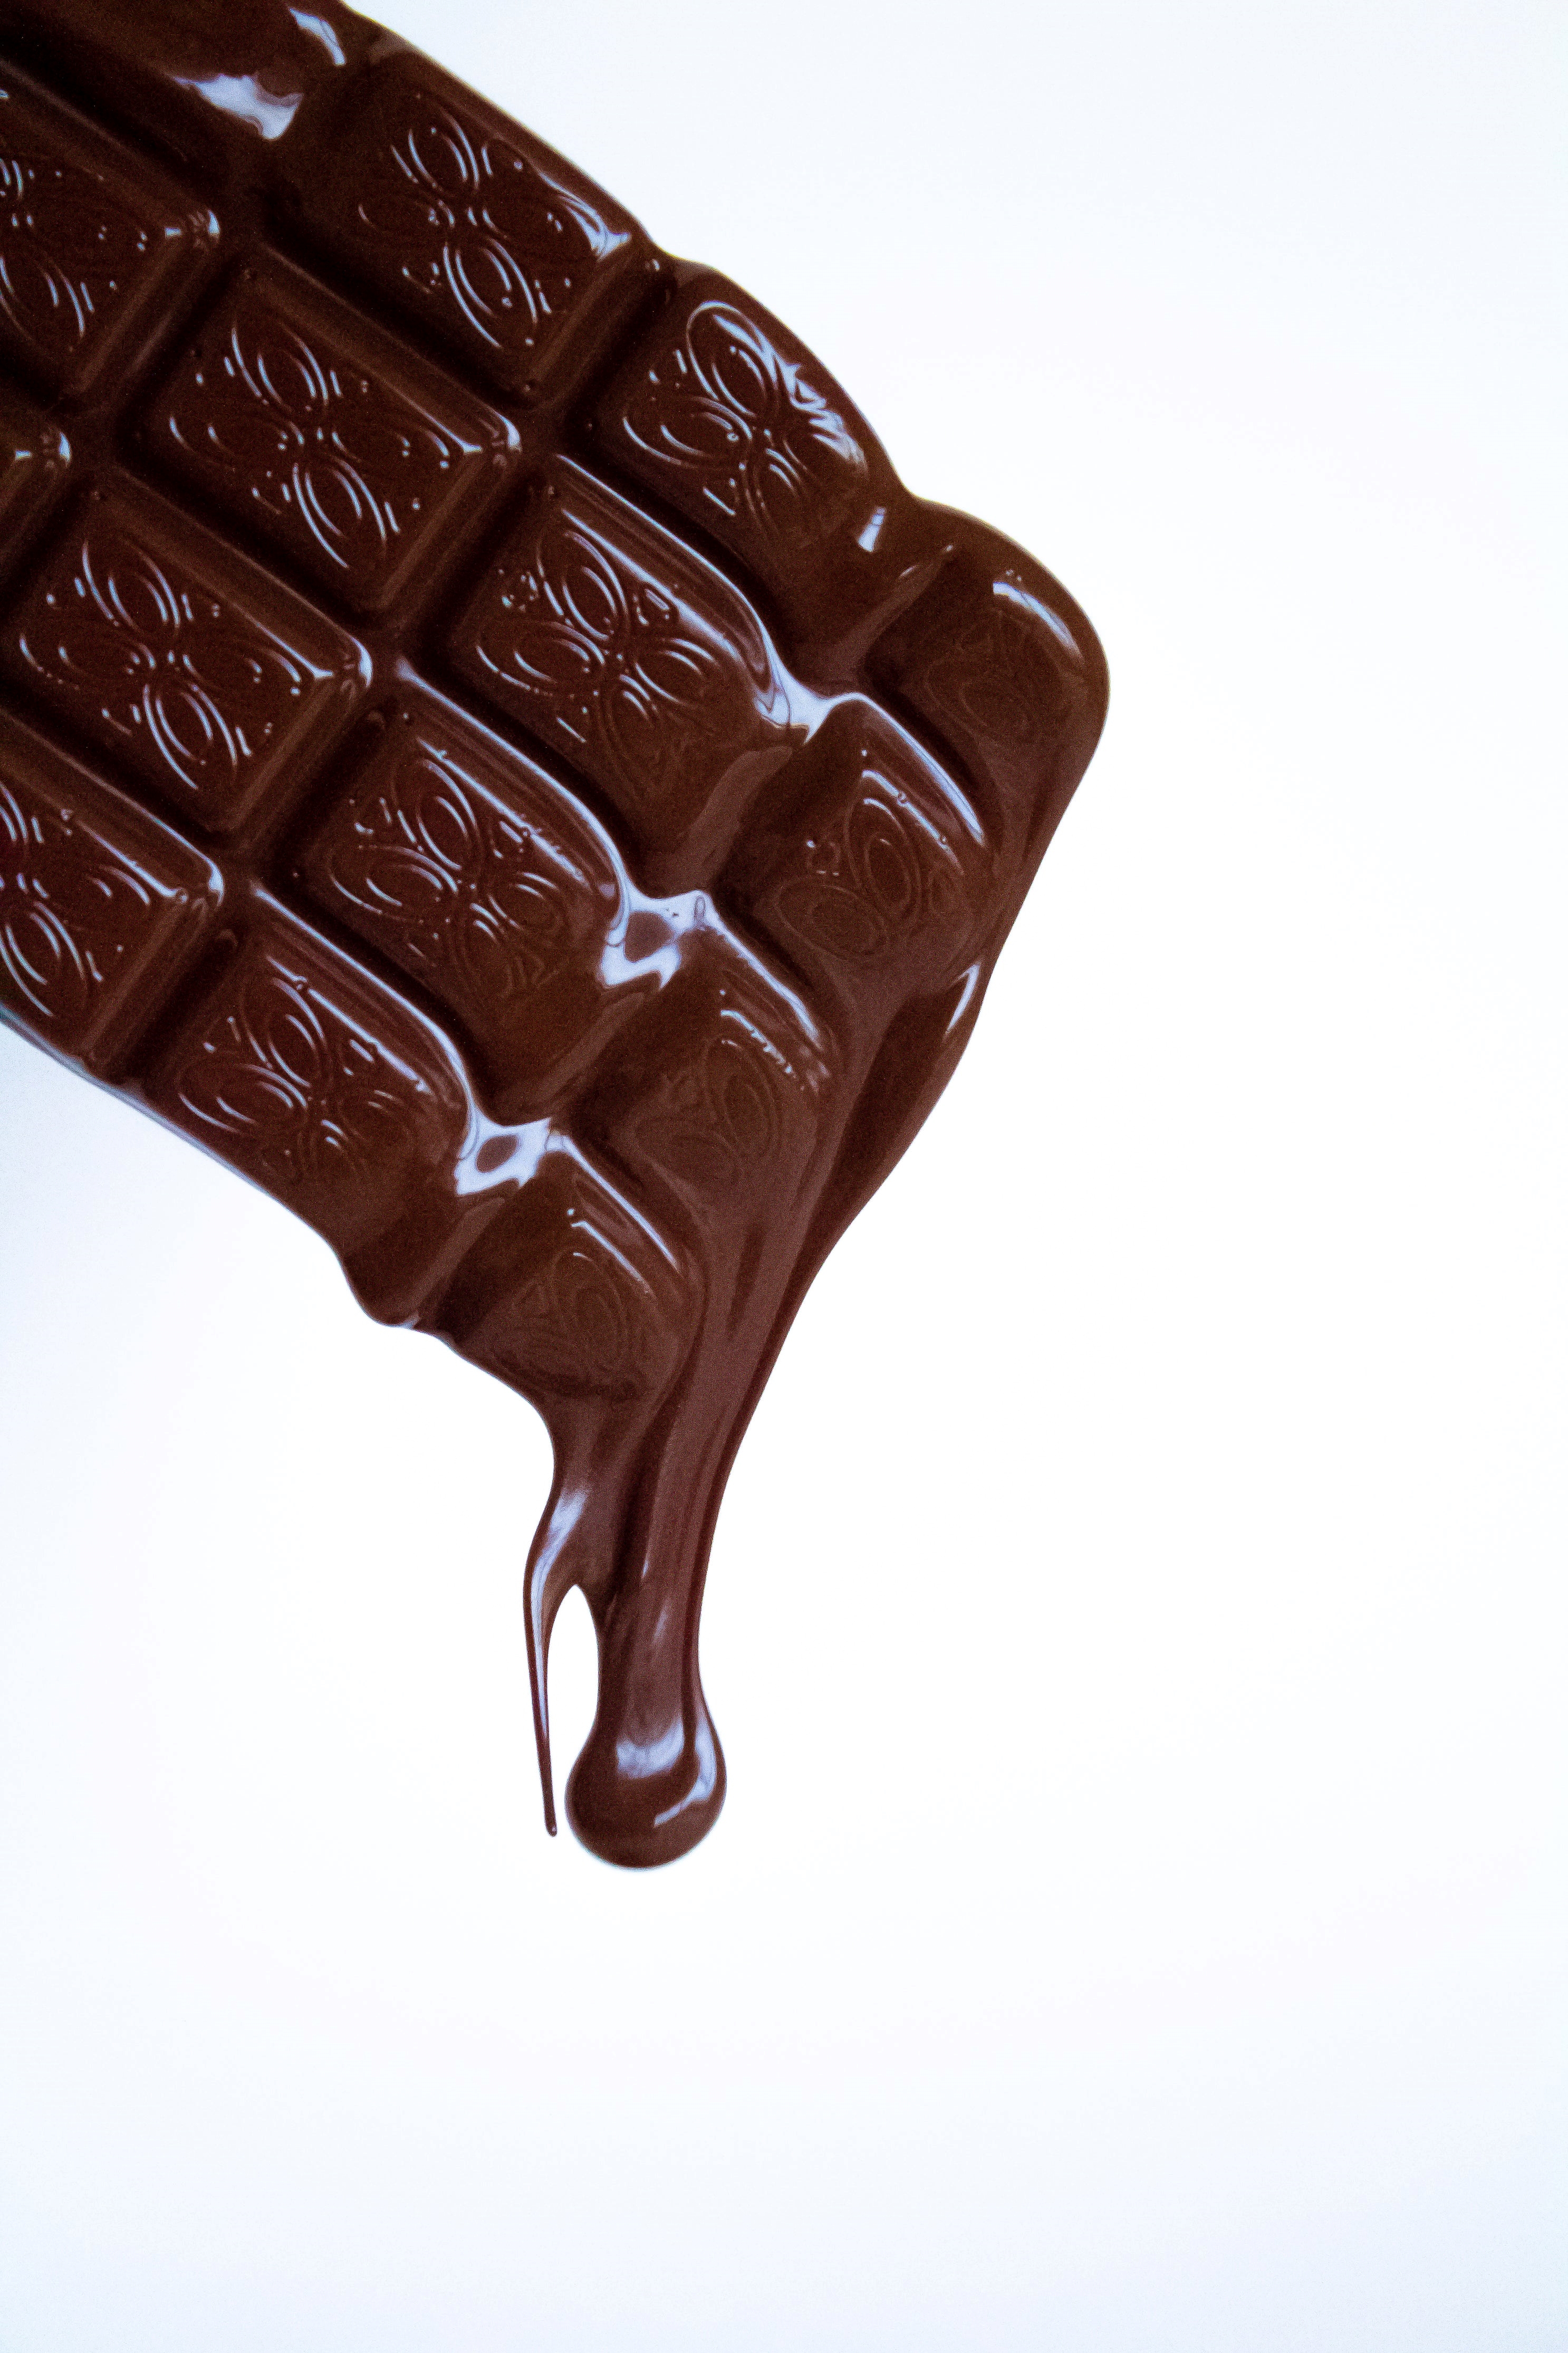 Melting Chocolate Bar by DeaneyMd on DeviantArt